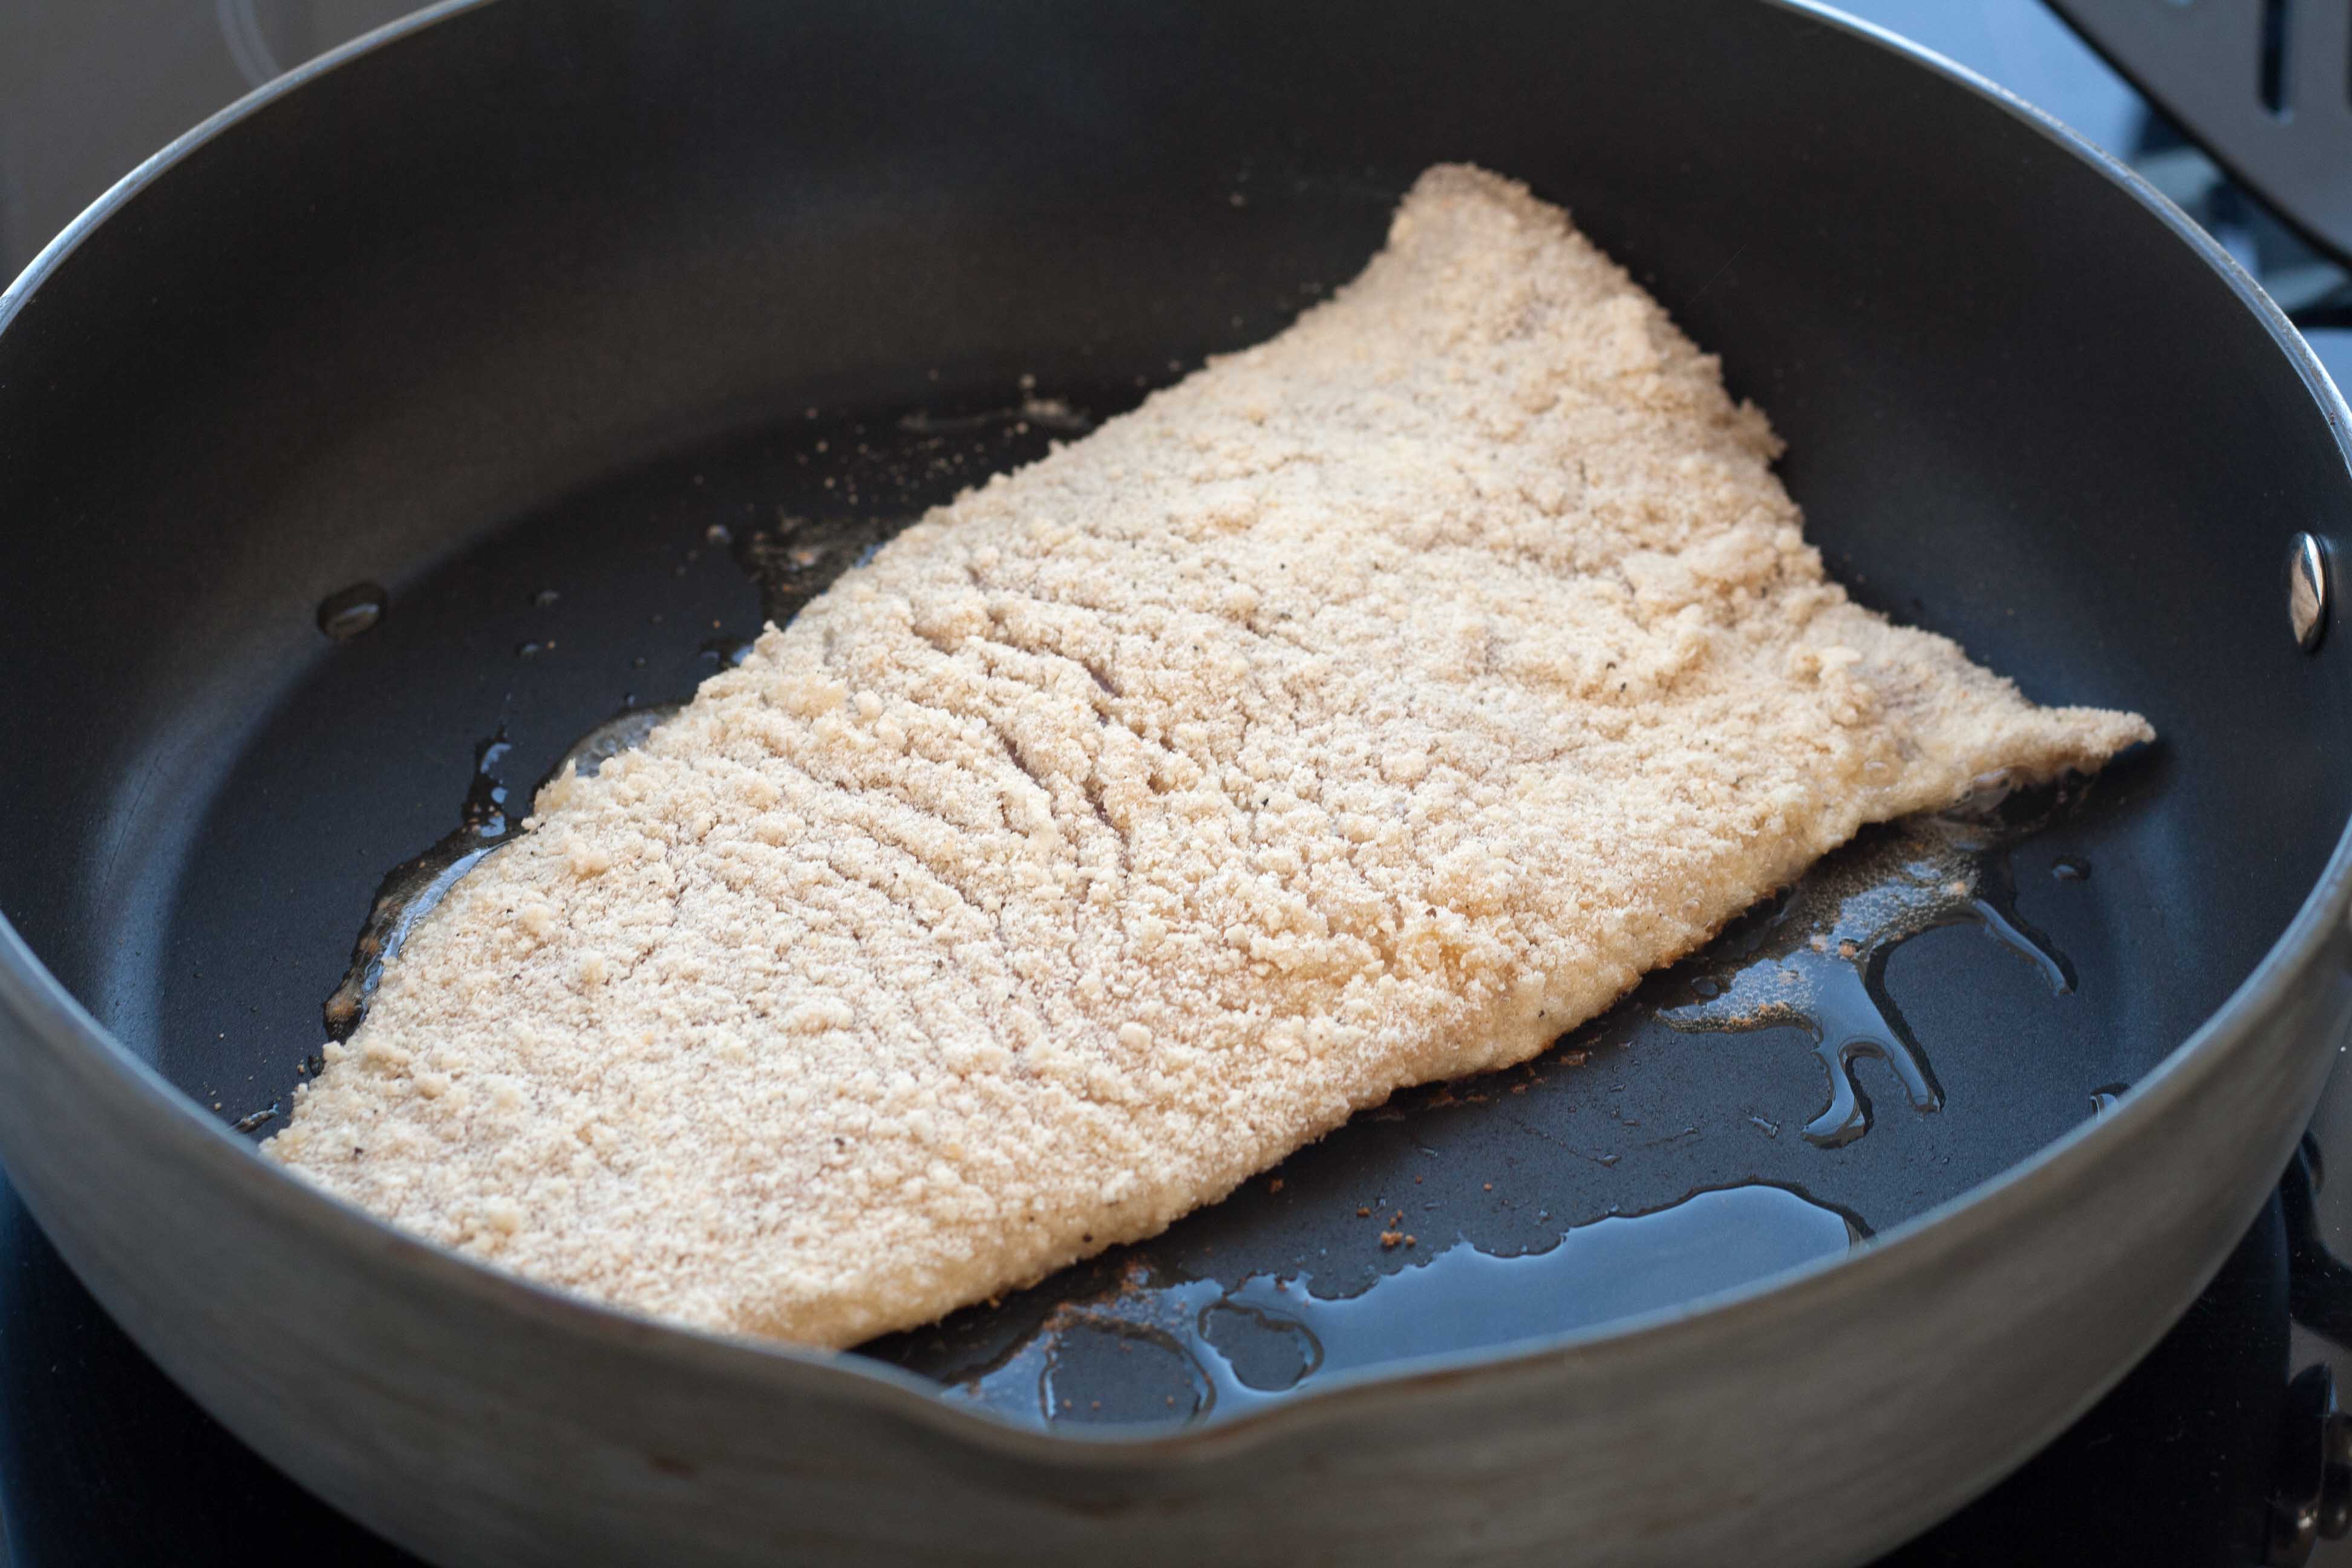 Recipe for Homemade Pan-Fried Coalfish with Rye Bread